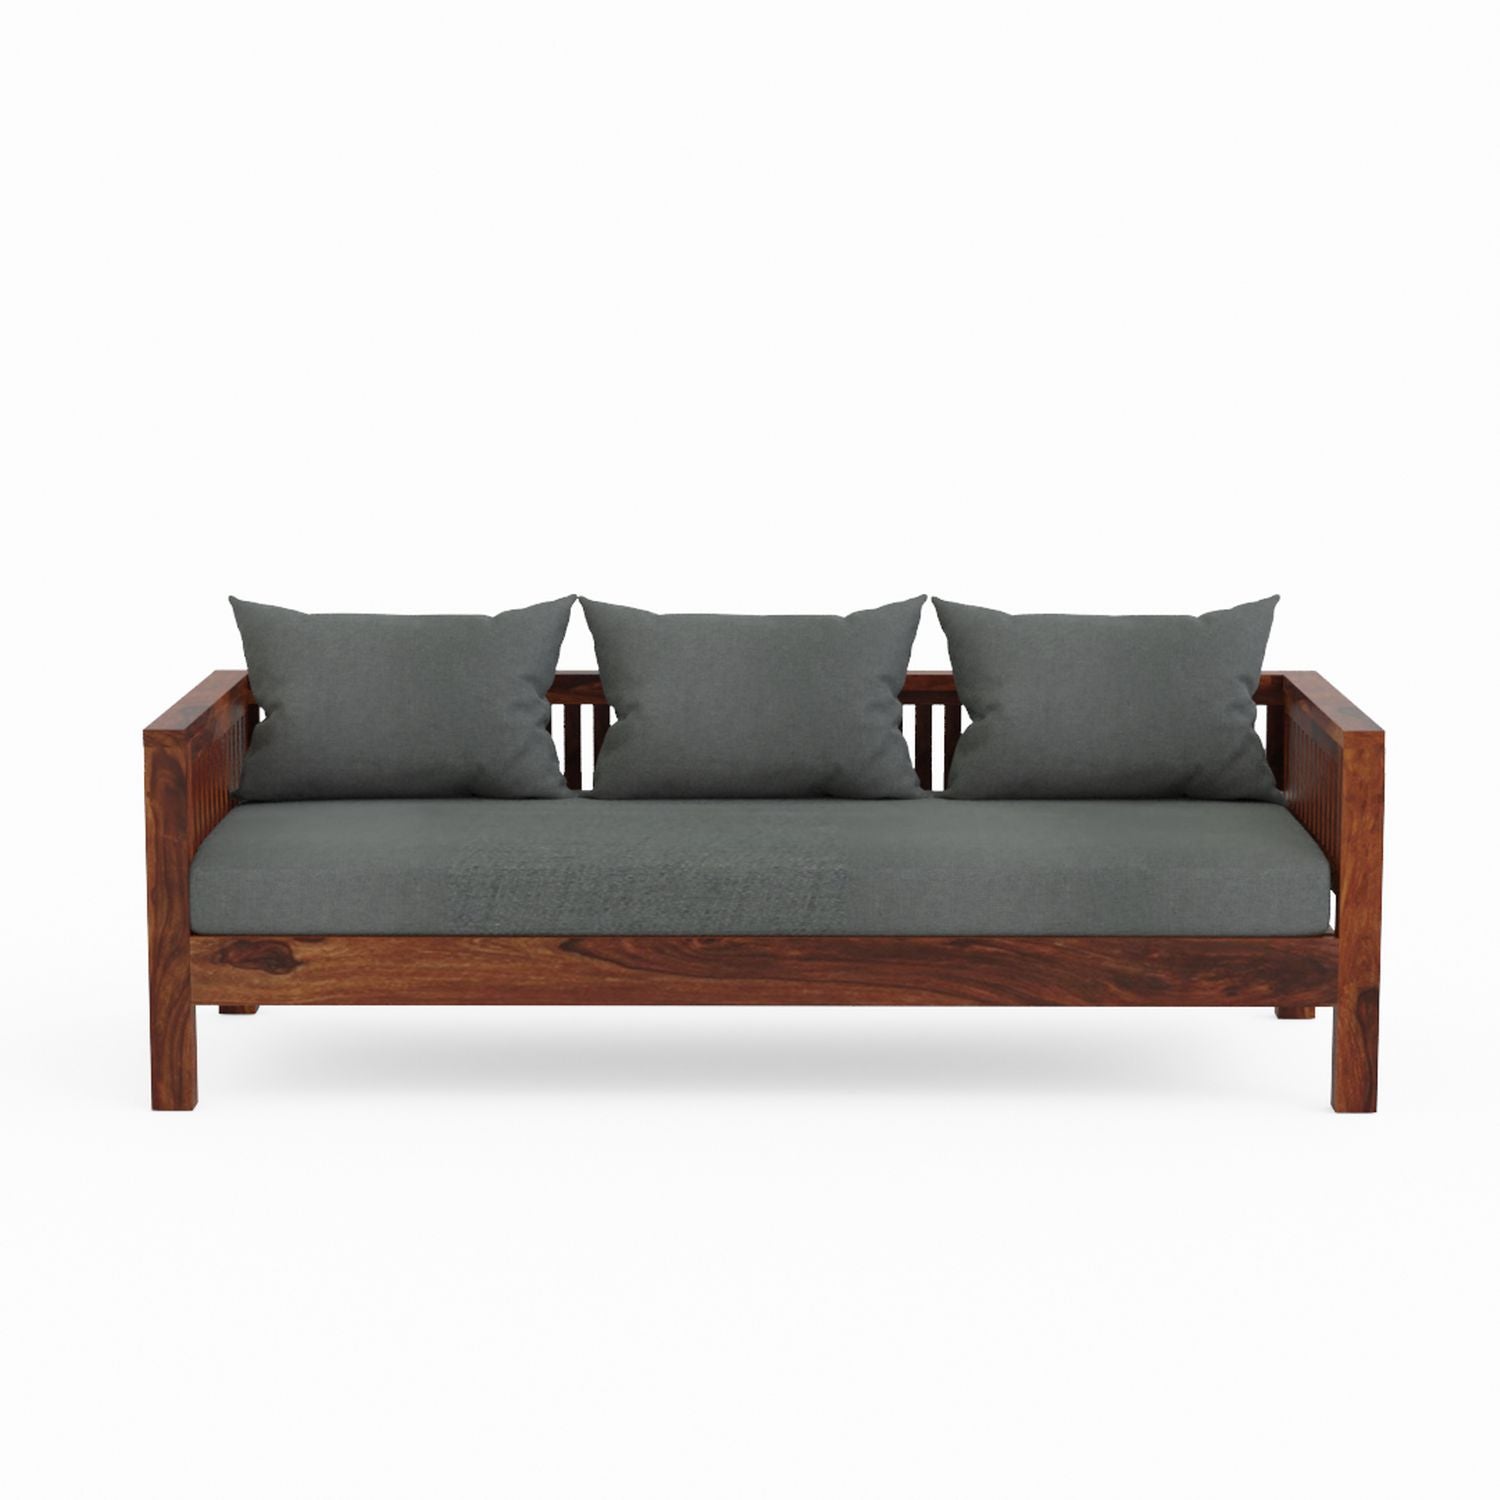 Essen Solid Sheesham Wood 3 Seater Sofa (Natural Finish)